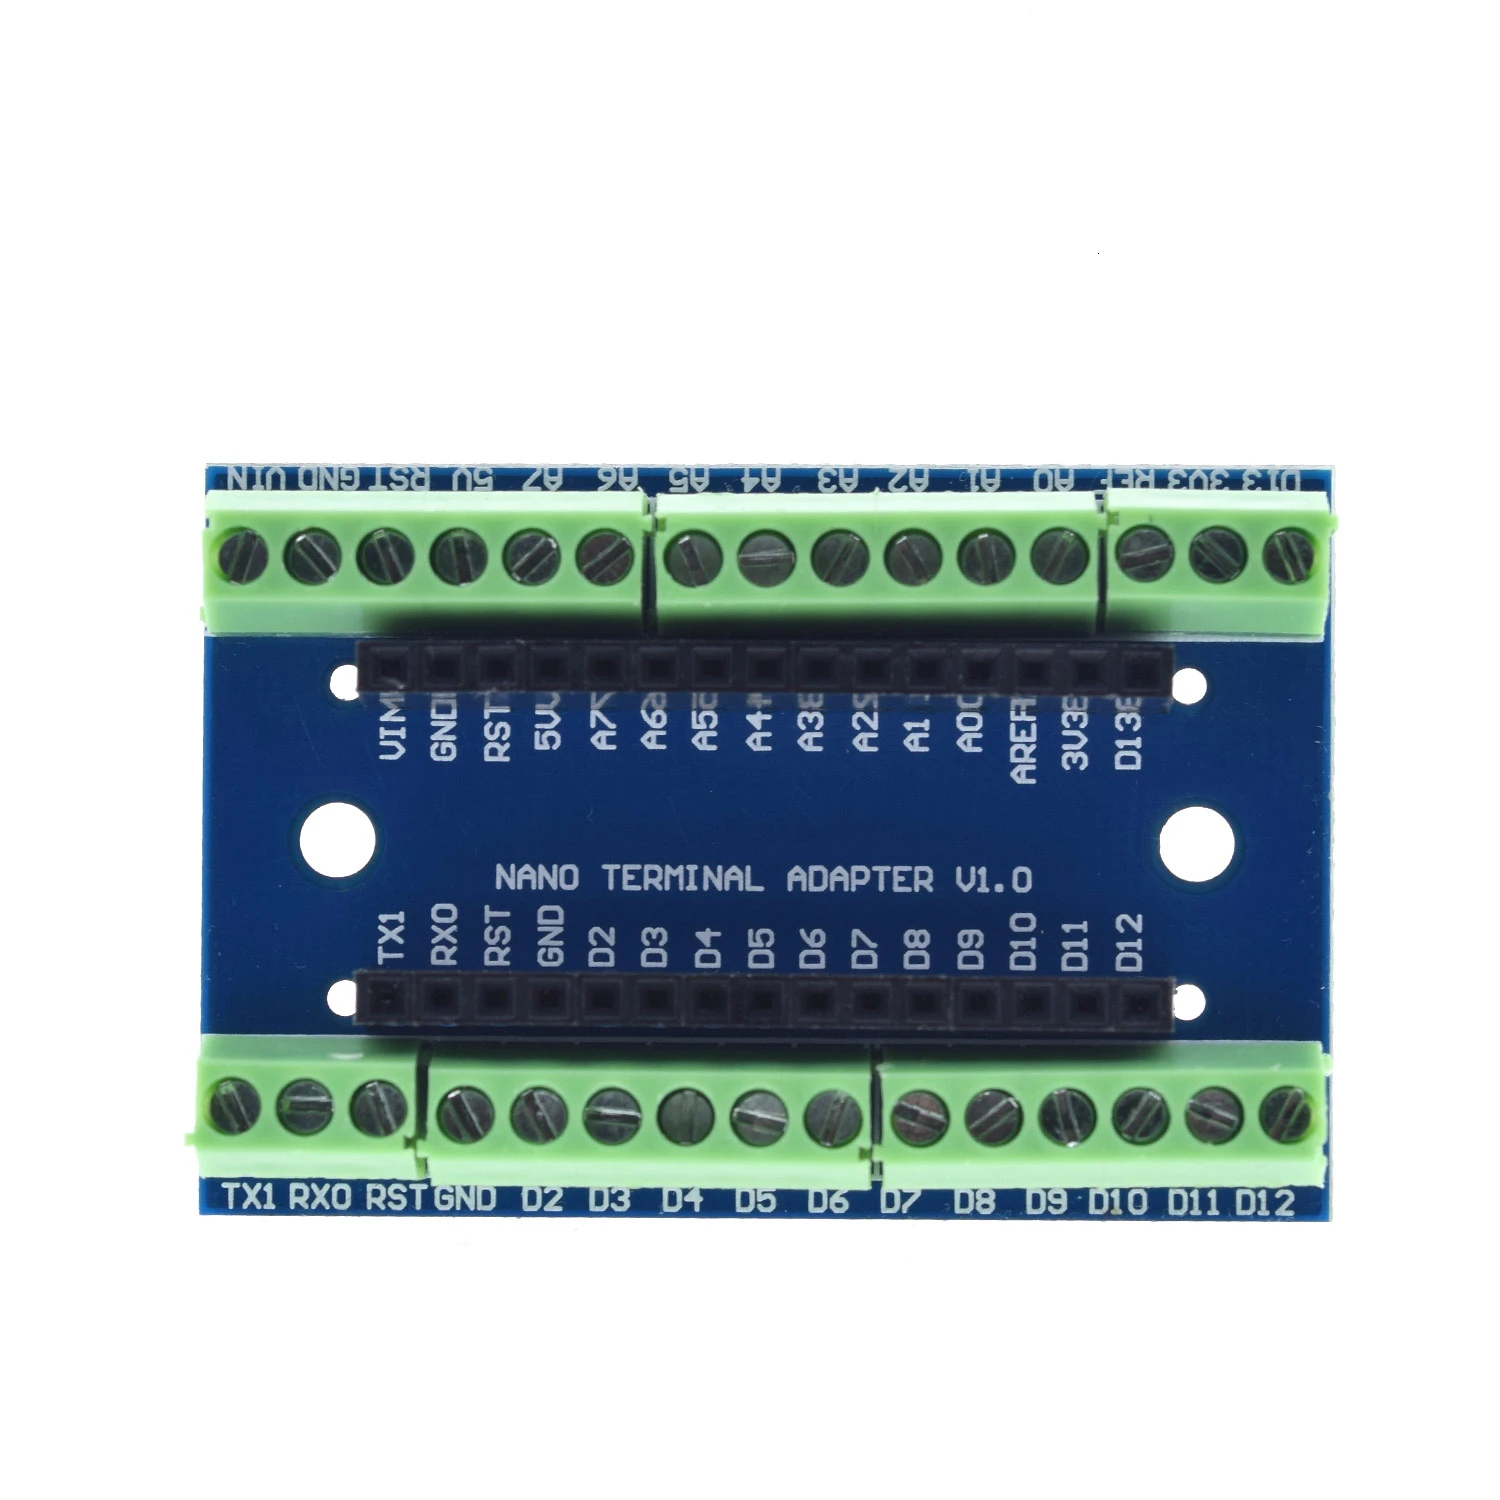 NANO V3.0 Controller Terminal Adapter Expansion Board NANO IO Shield Simple Extension Plate For Arduino AVR ATMEGA328P Nano 3.0